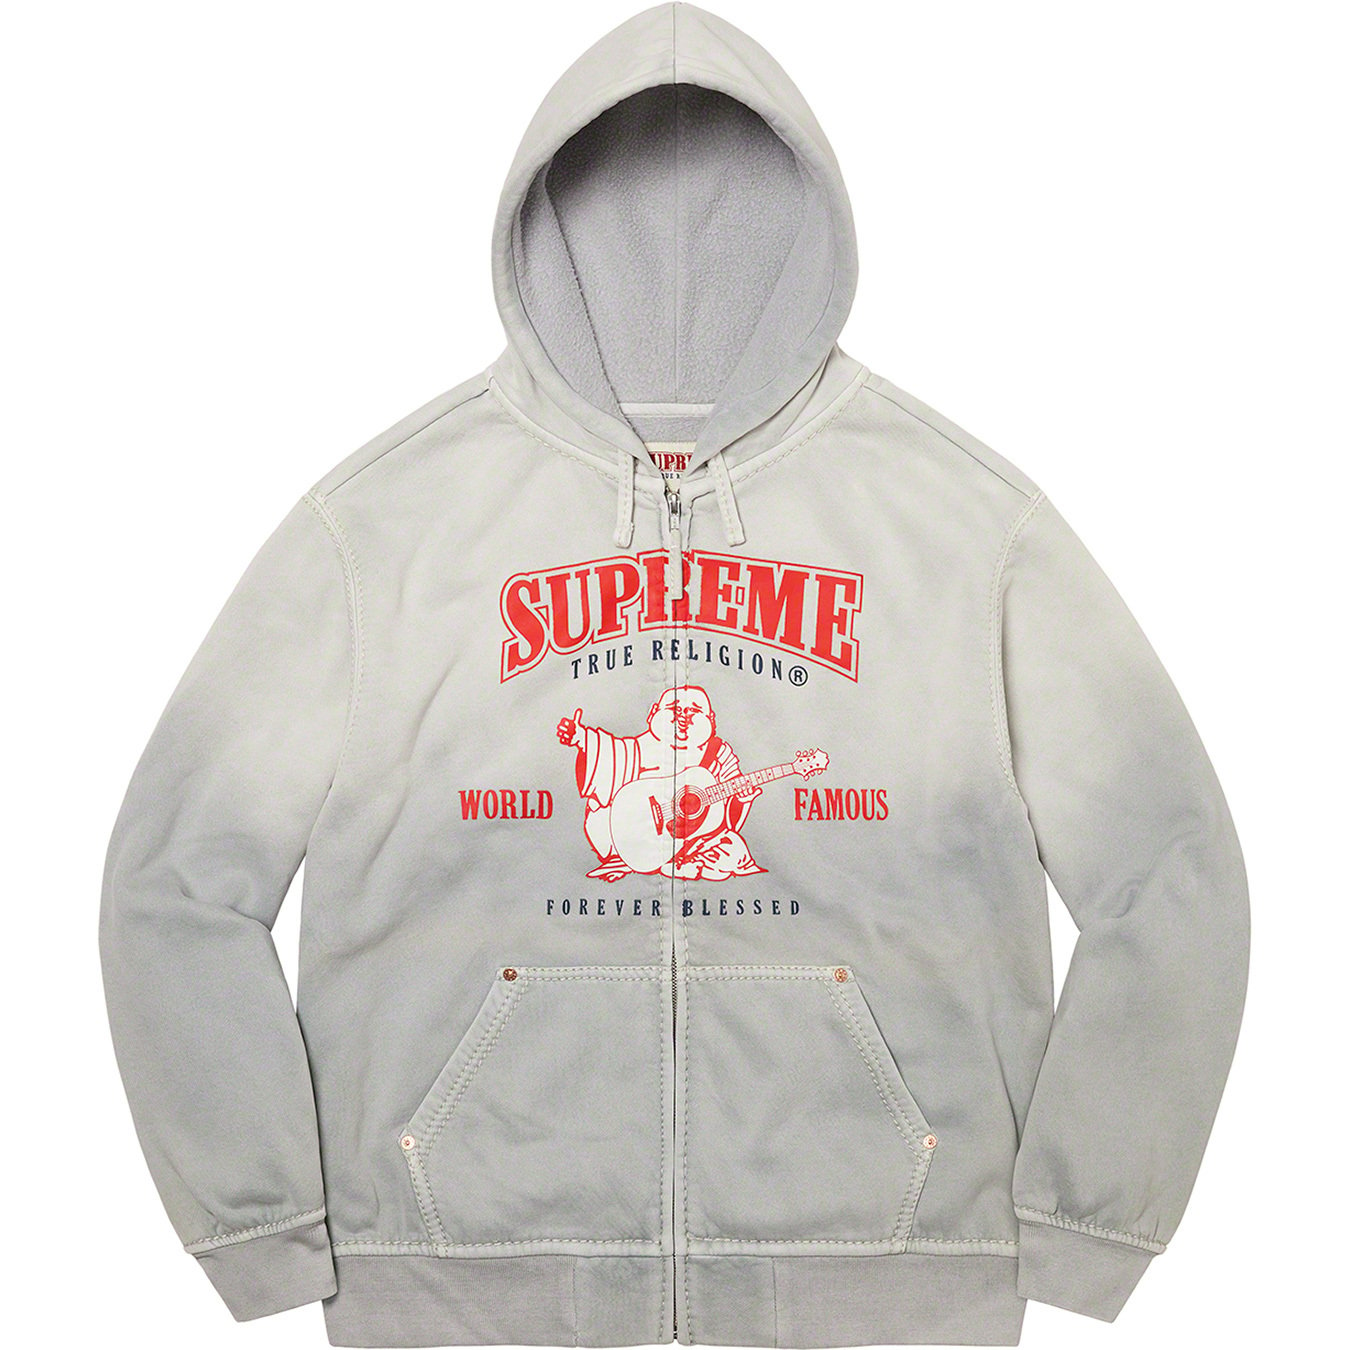 Supreme®/True Religion® Zip Up Hooded Sweatshirt - Supreme Community